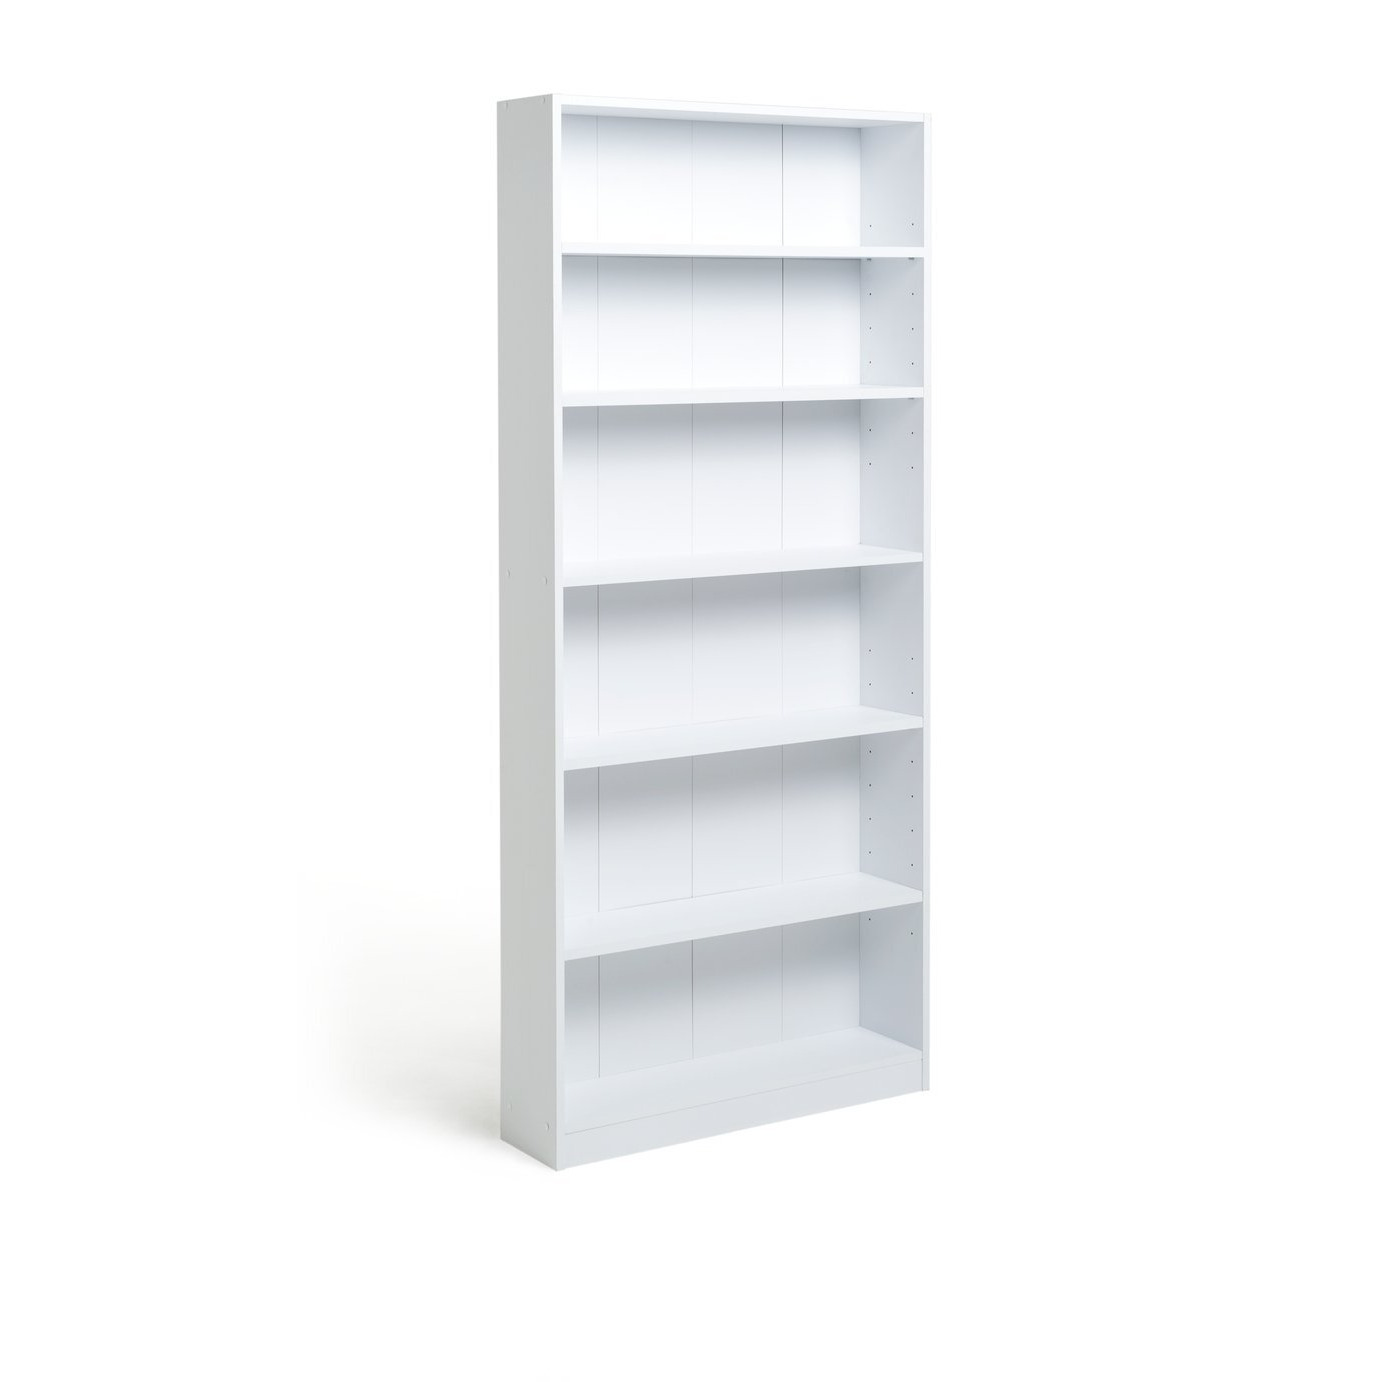 Argos Home Maine Bookcase - White - image 1